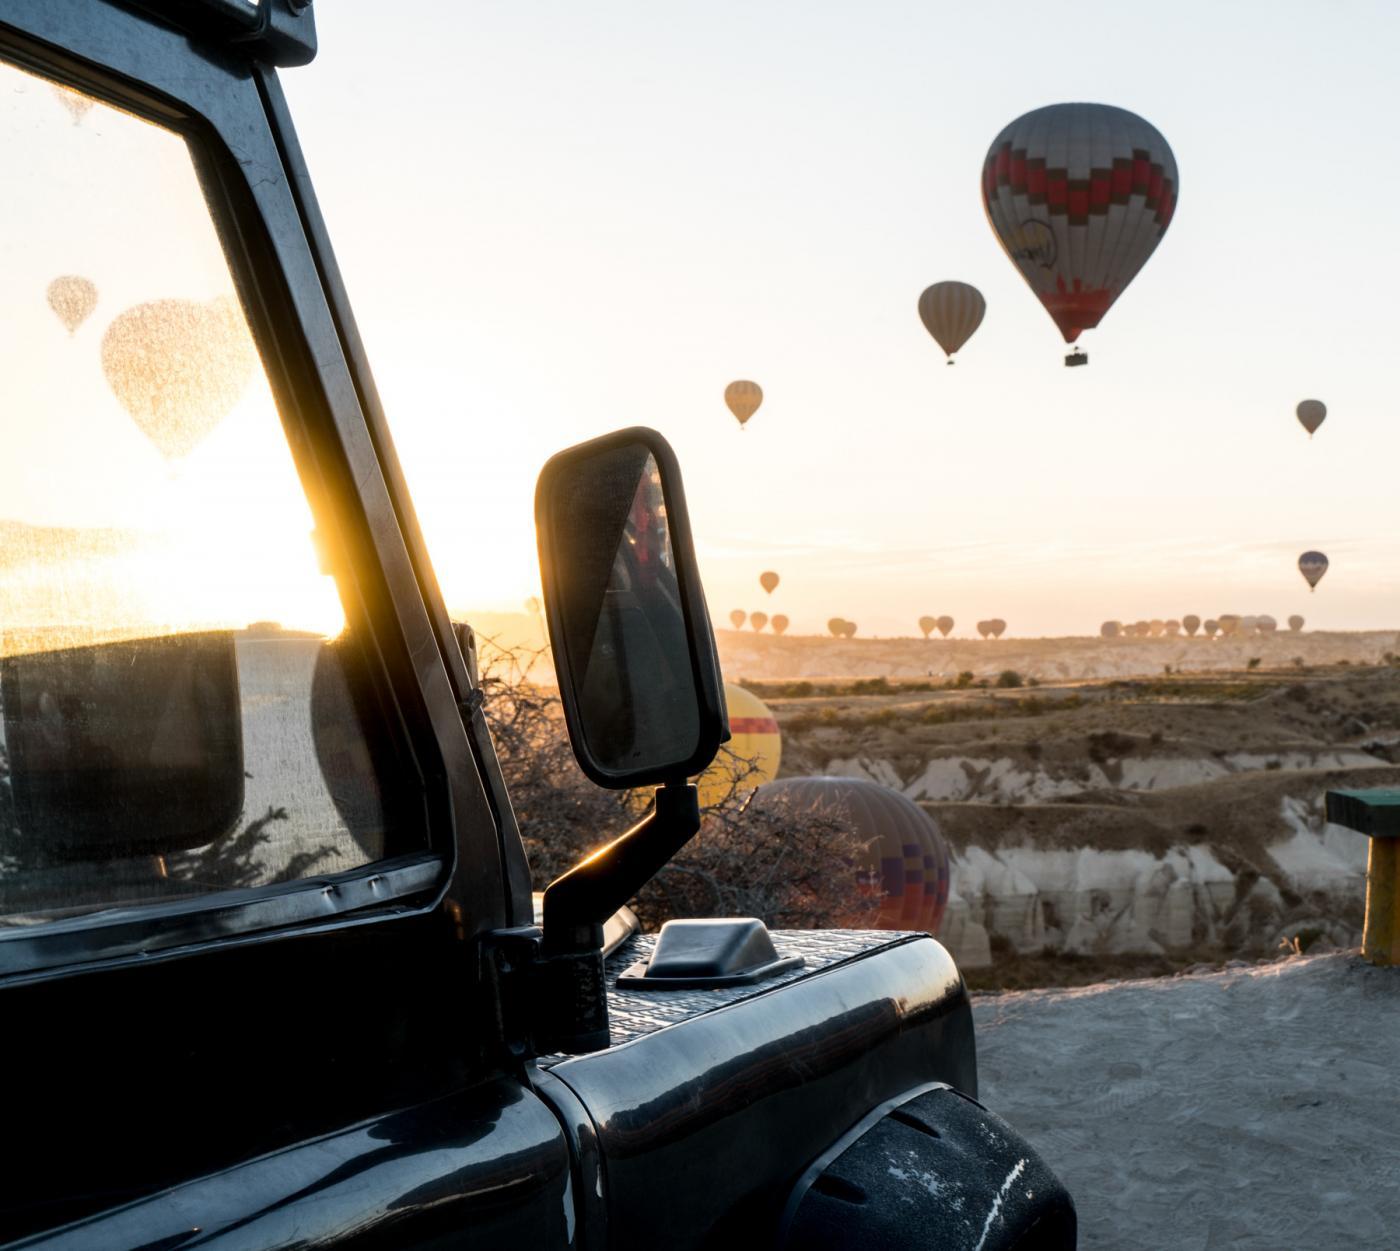 Balloon ride over the Love Valley in Cappadocia, Turkey